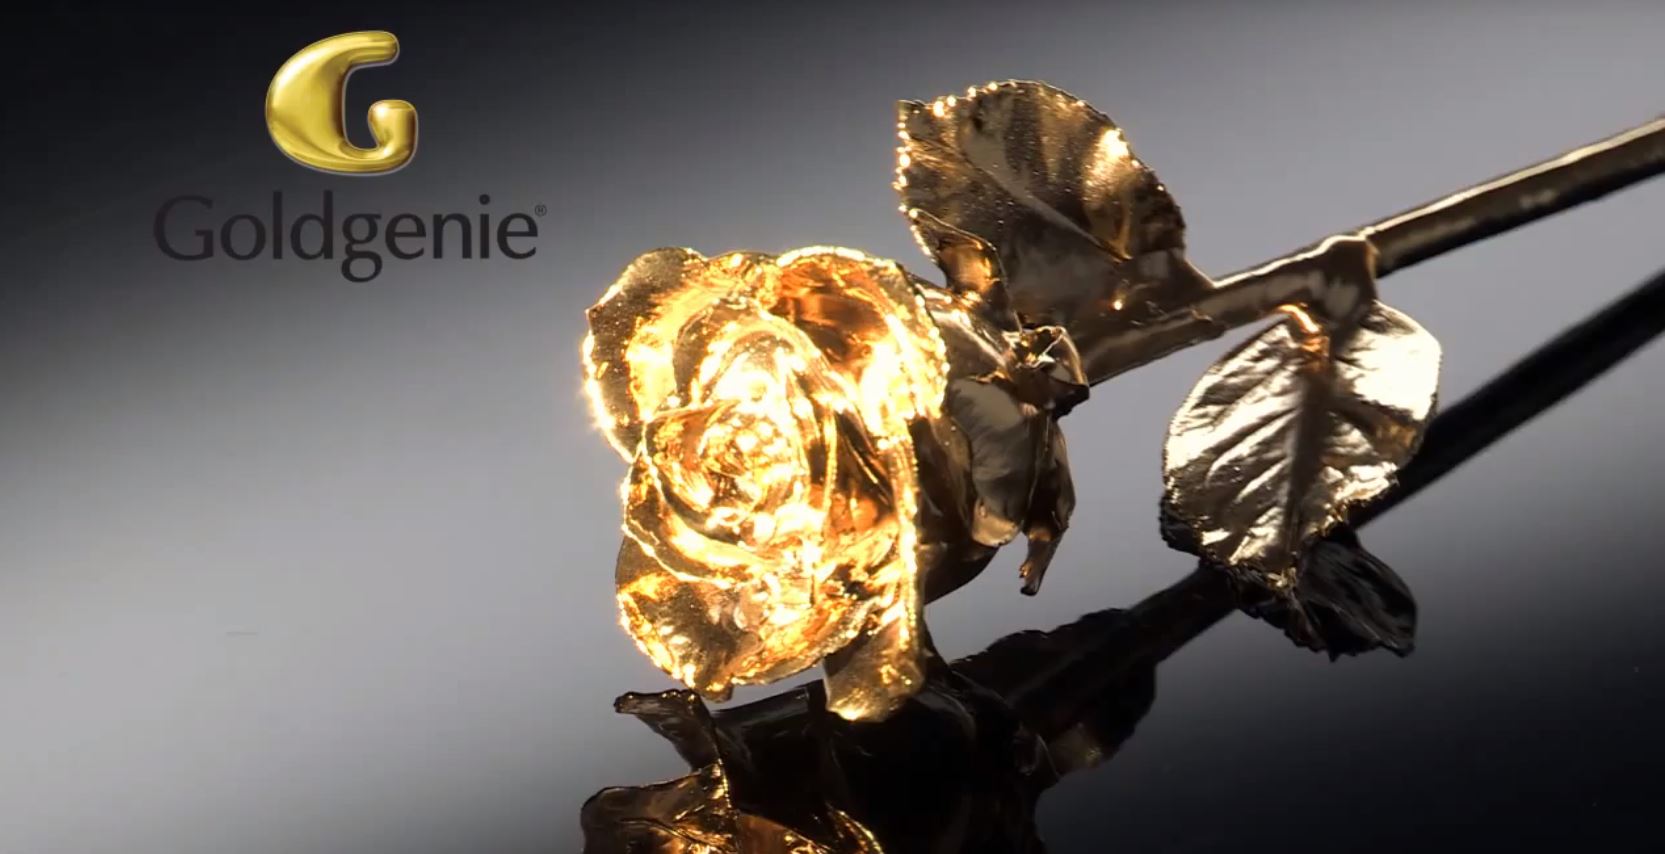 2014 – Trademark office video featuring Goldgenie